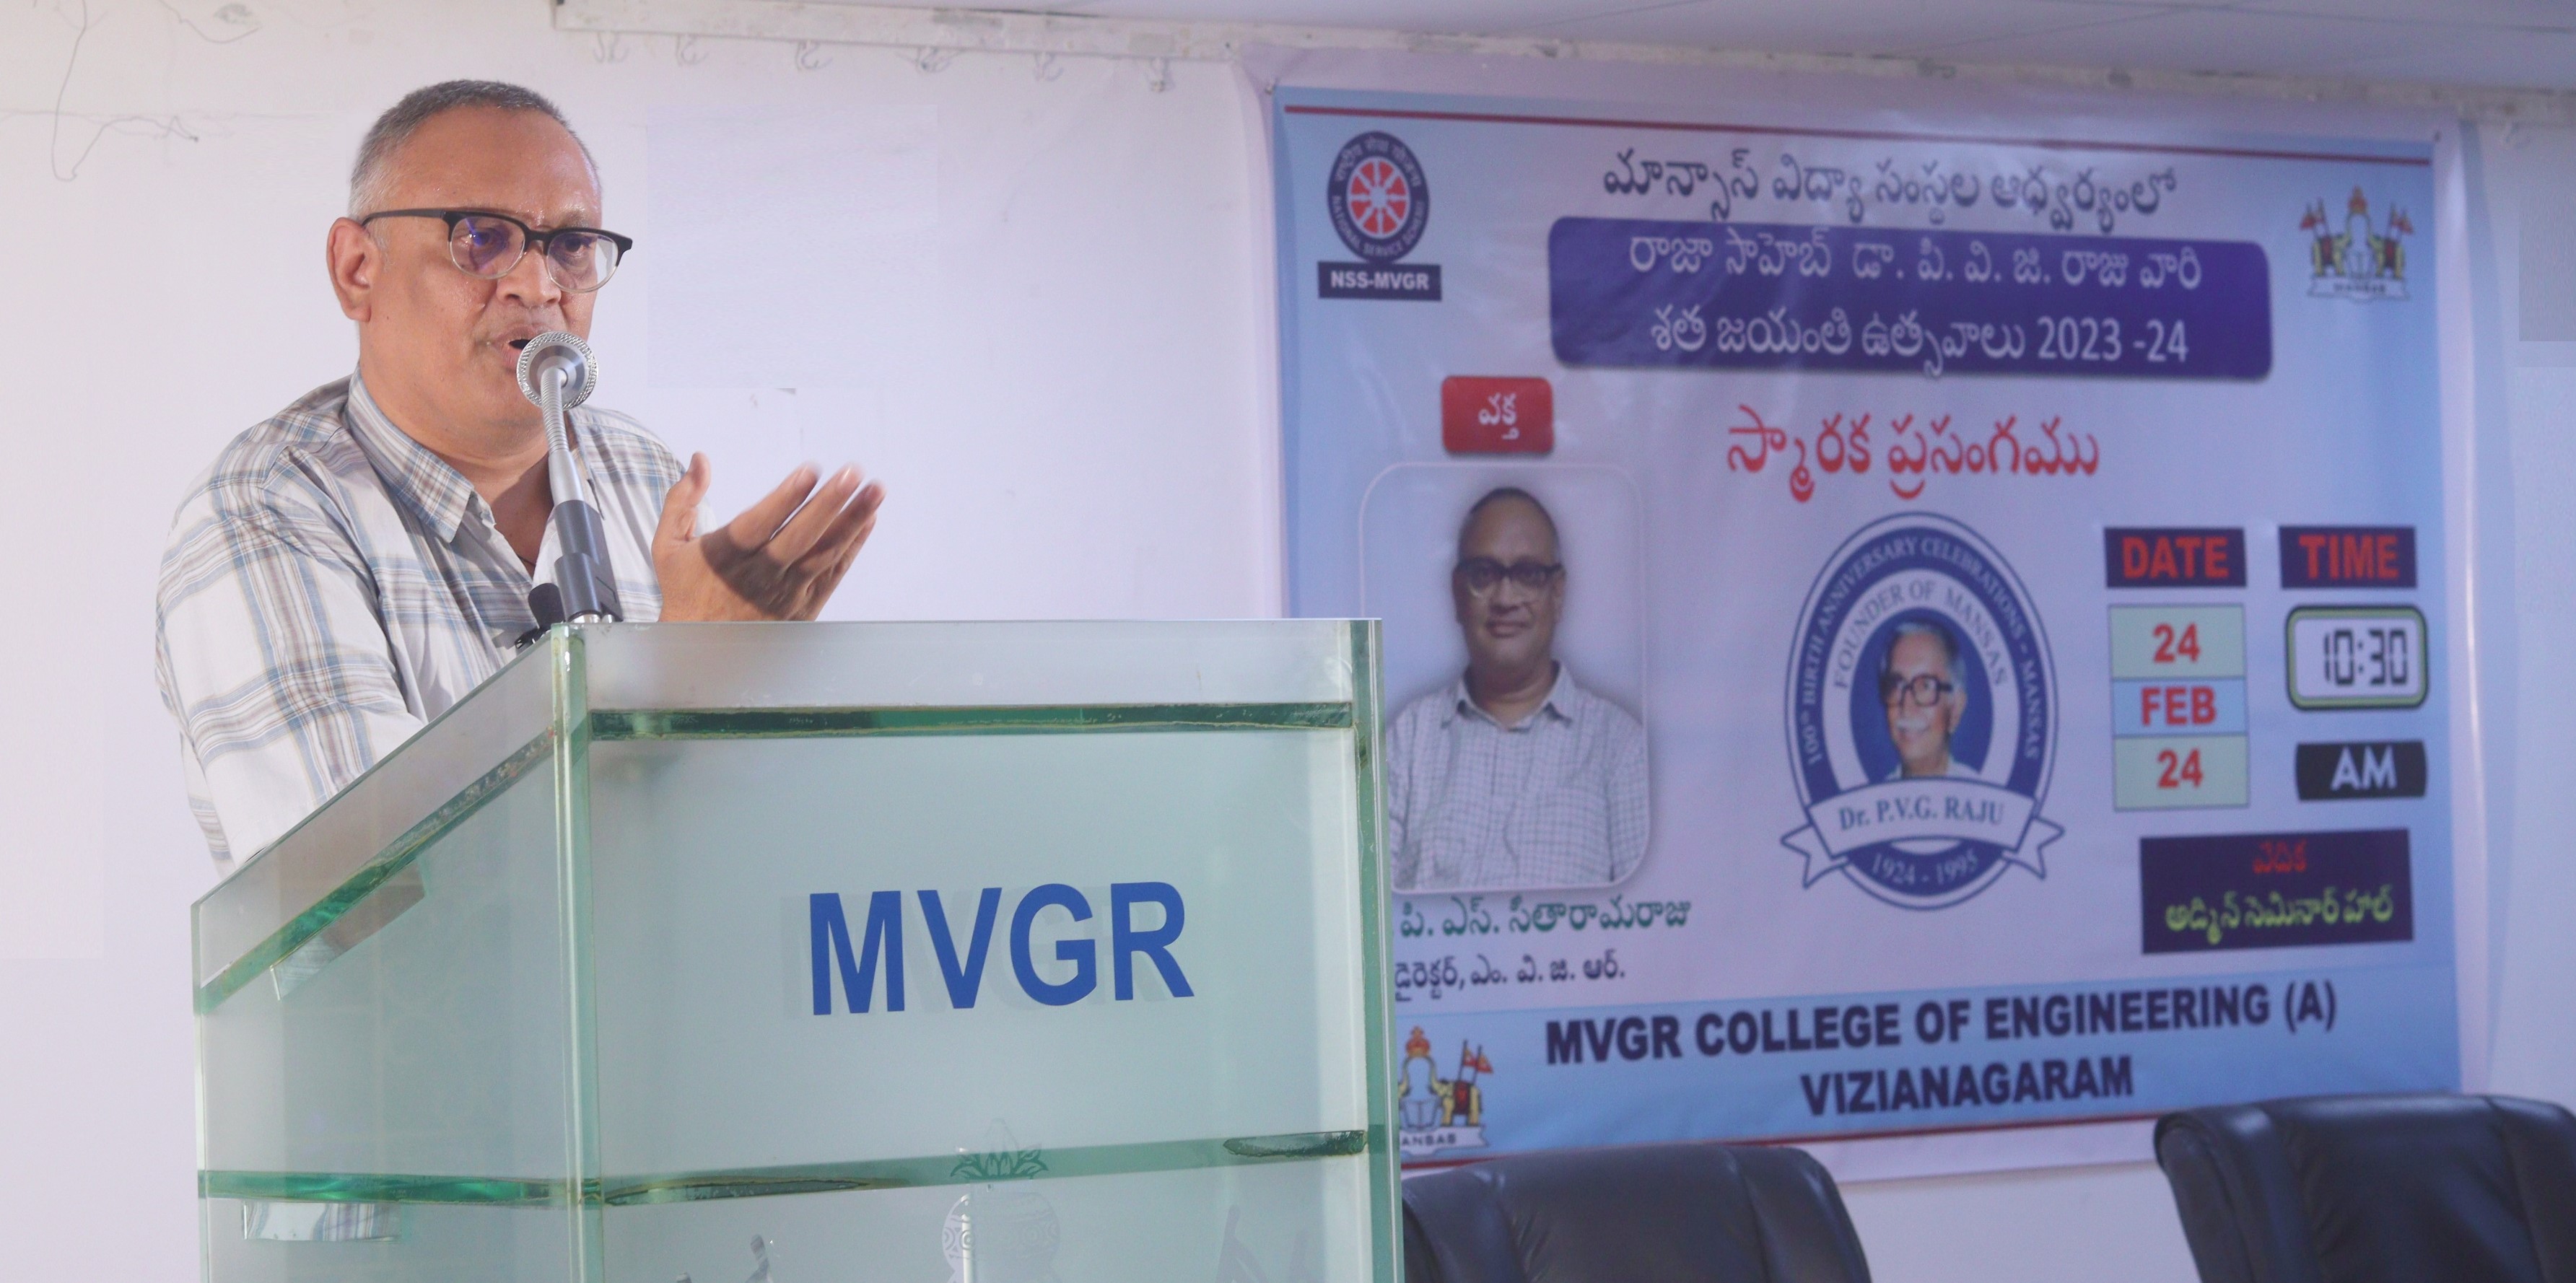 Prof. P. S. Sitarama Raju, Director-MVGR, delivered an endowment talk on 24- Feb-24, as a part of Raja Saheb DR. PVG Raju Centenary Celebrations.